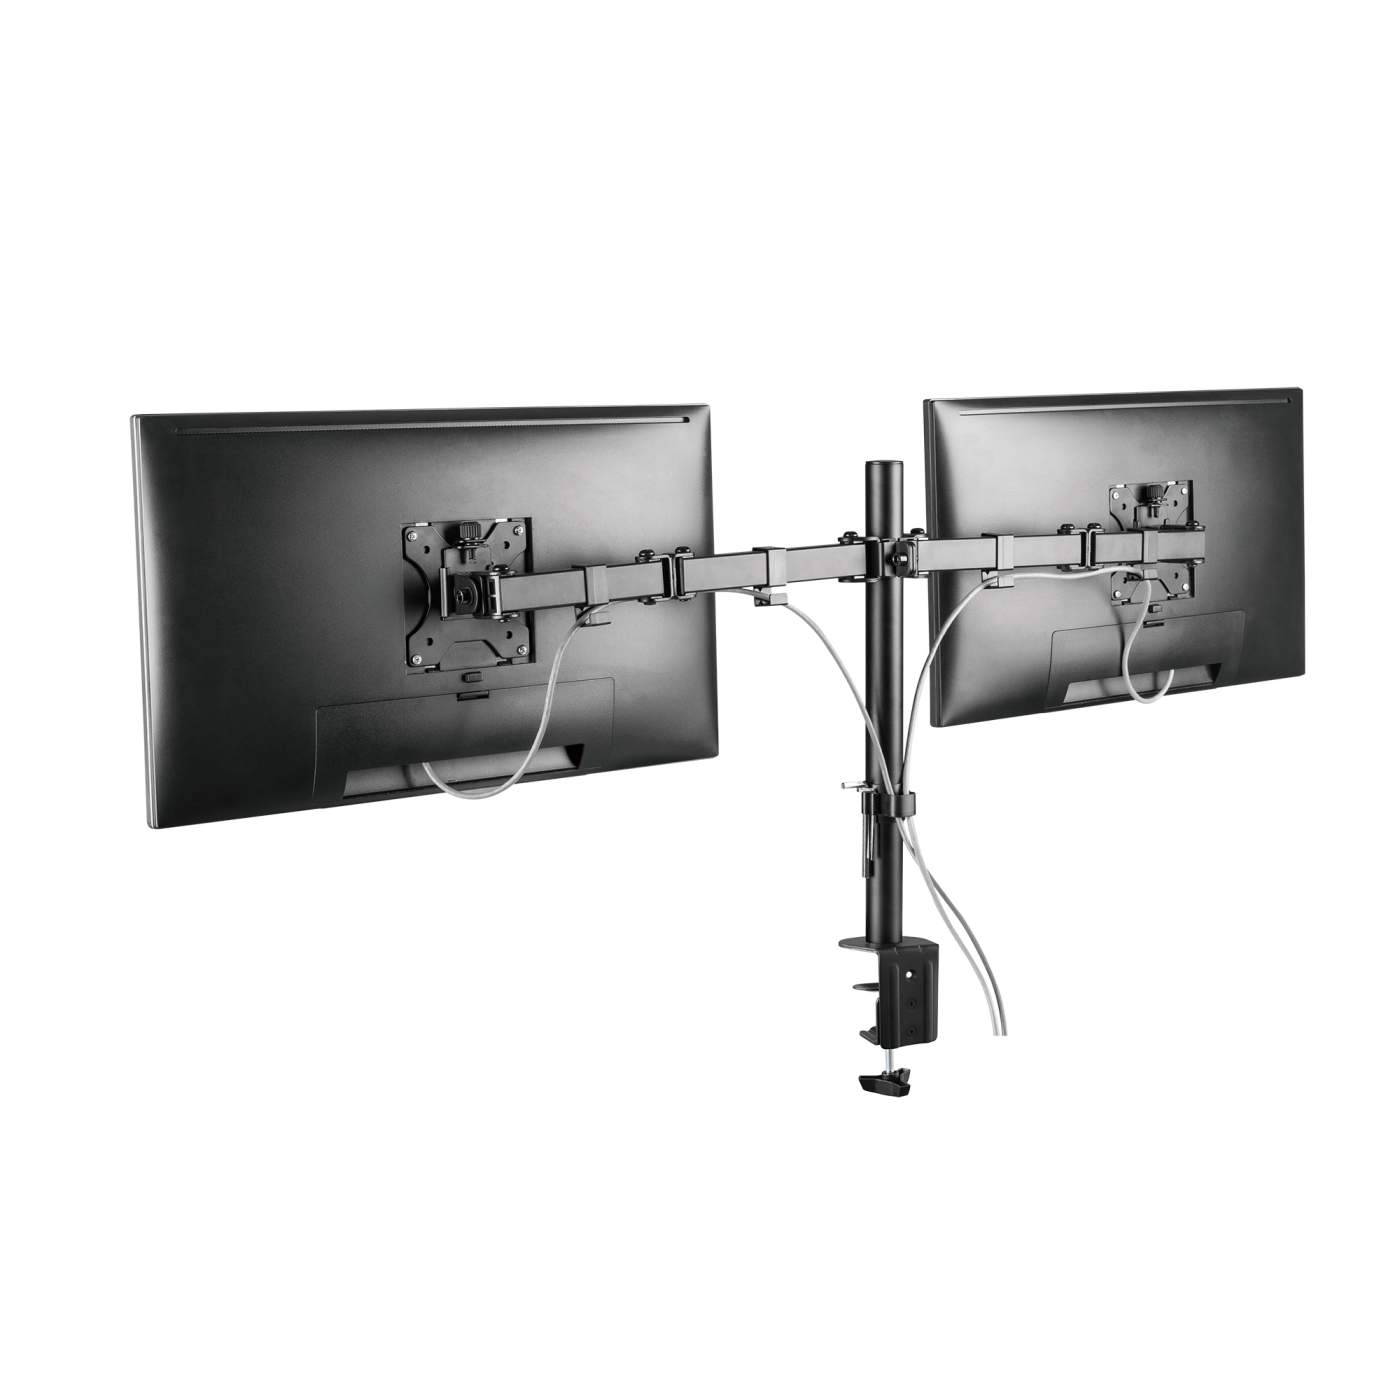 Manhattan Soporte para un monitor, de escritorio, movimiento de brazos de  doble articulación (461542)